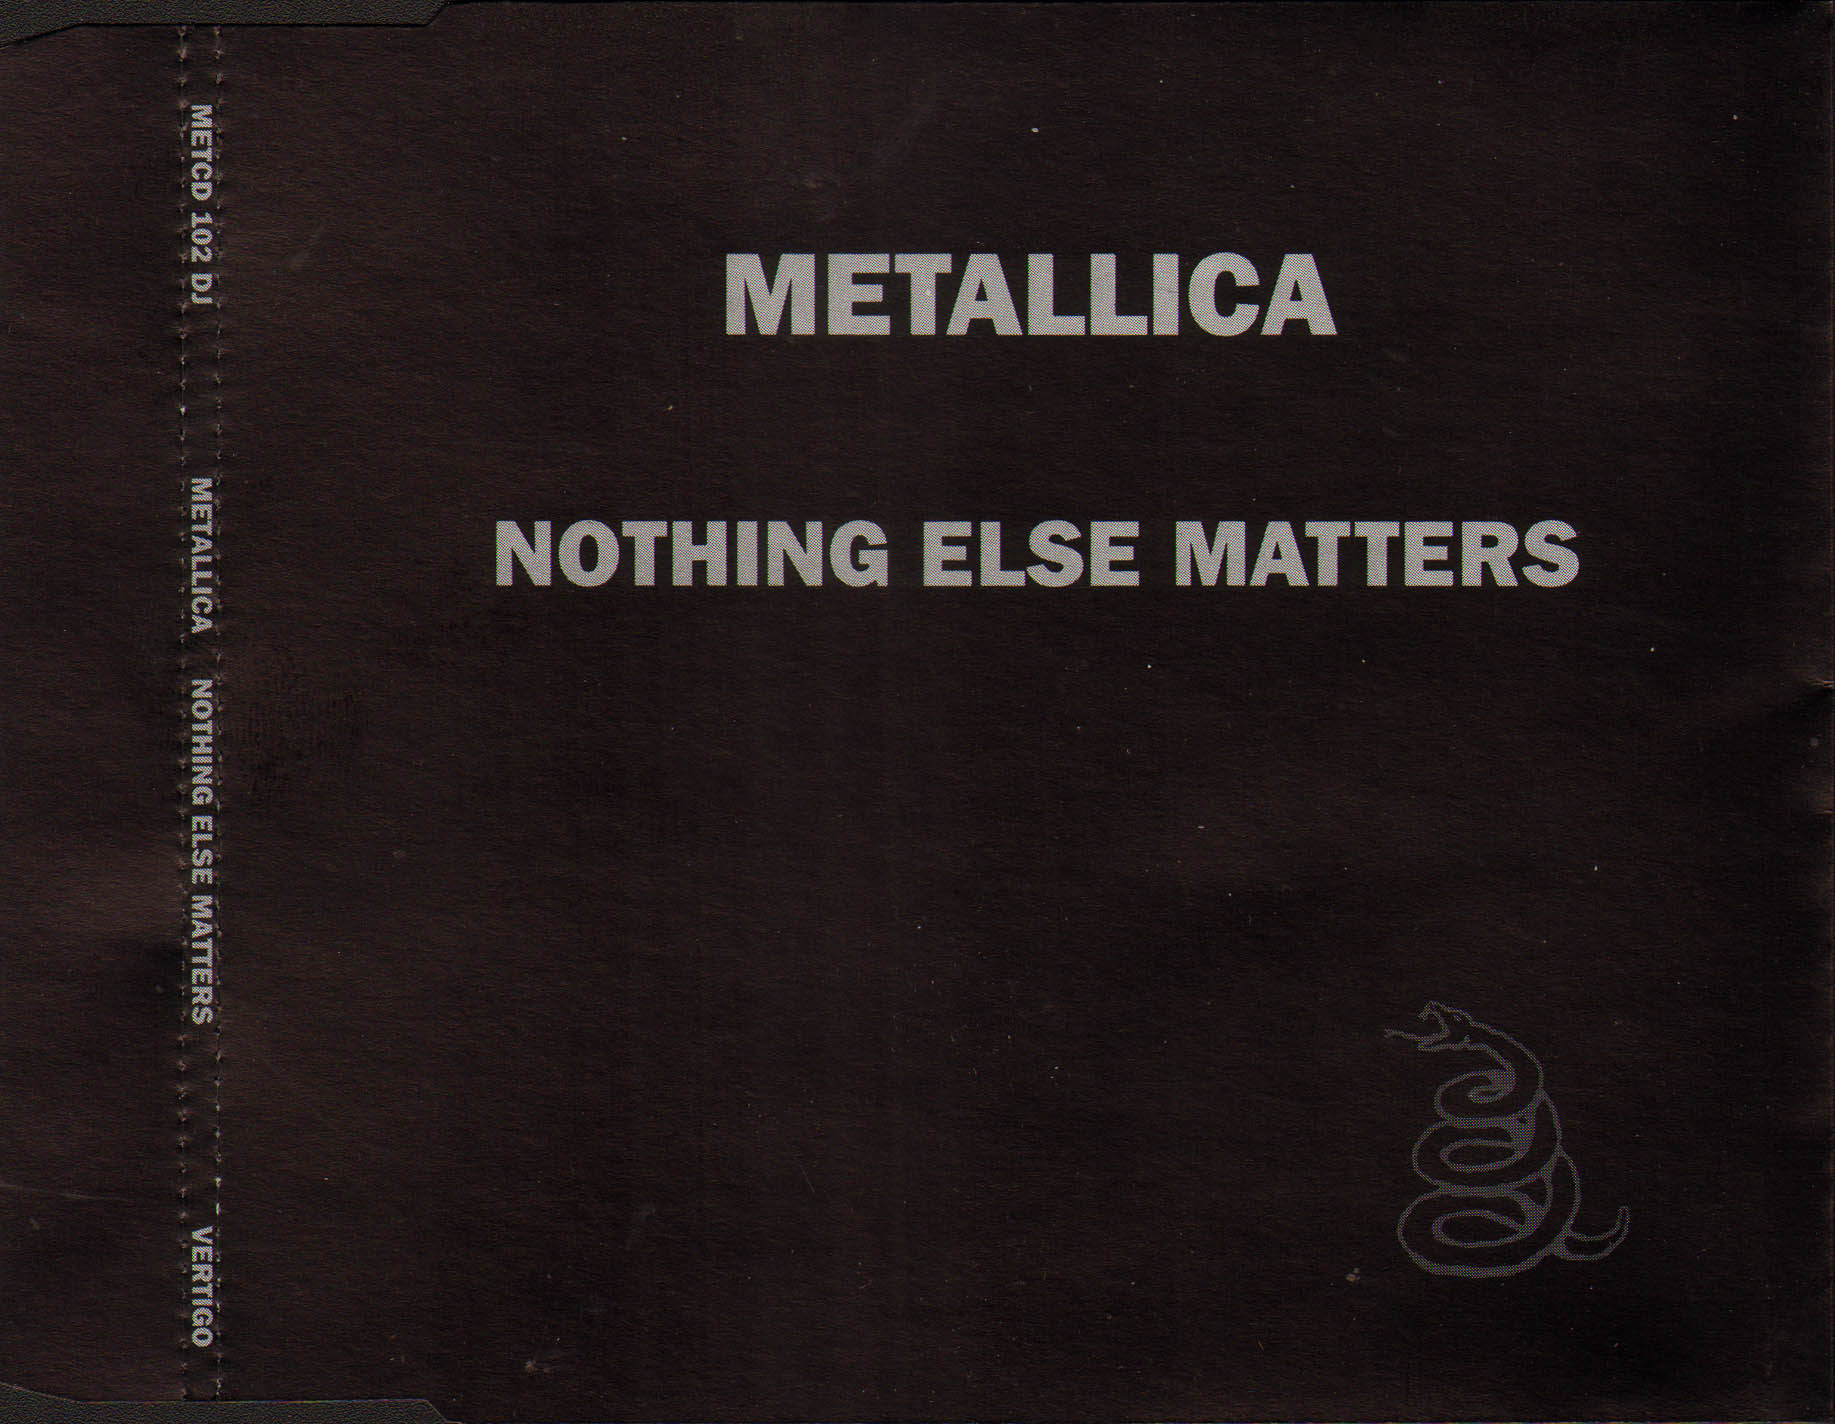 metallica nothing else matters album cover